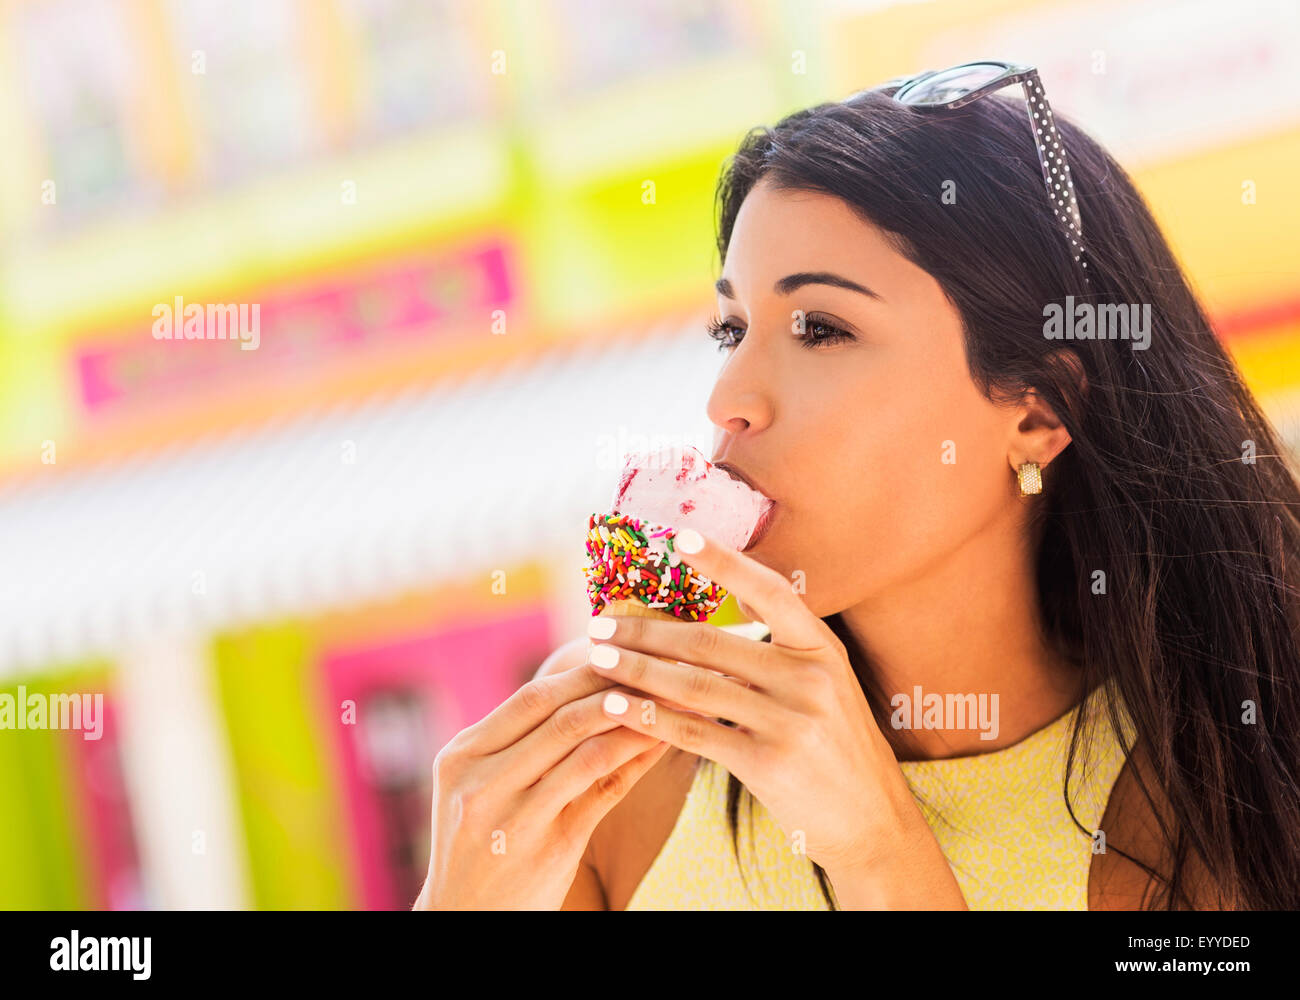 Hispanic woman eating ice cream cone outdoors Stock Photo